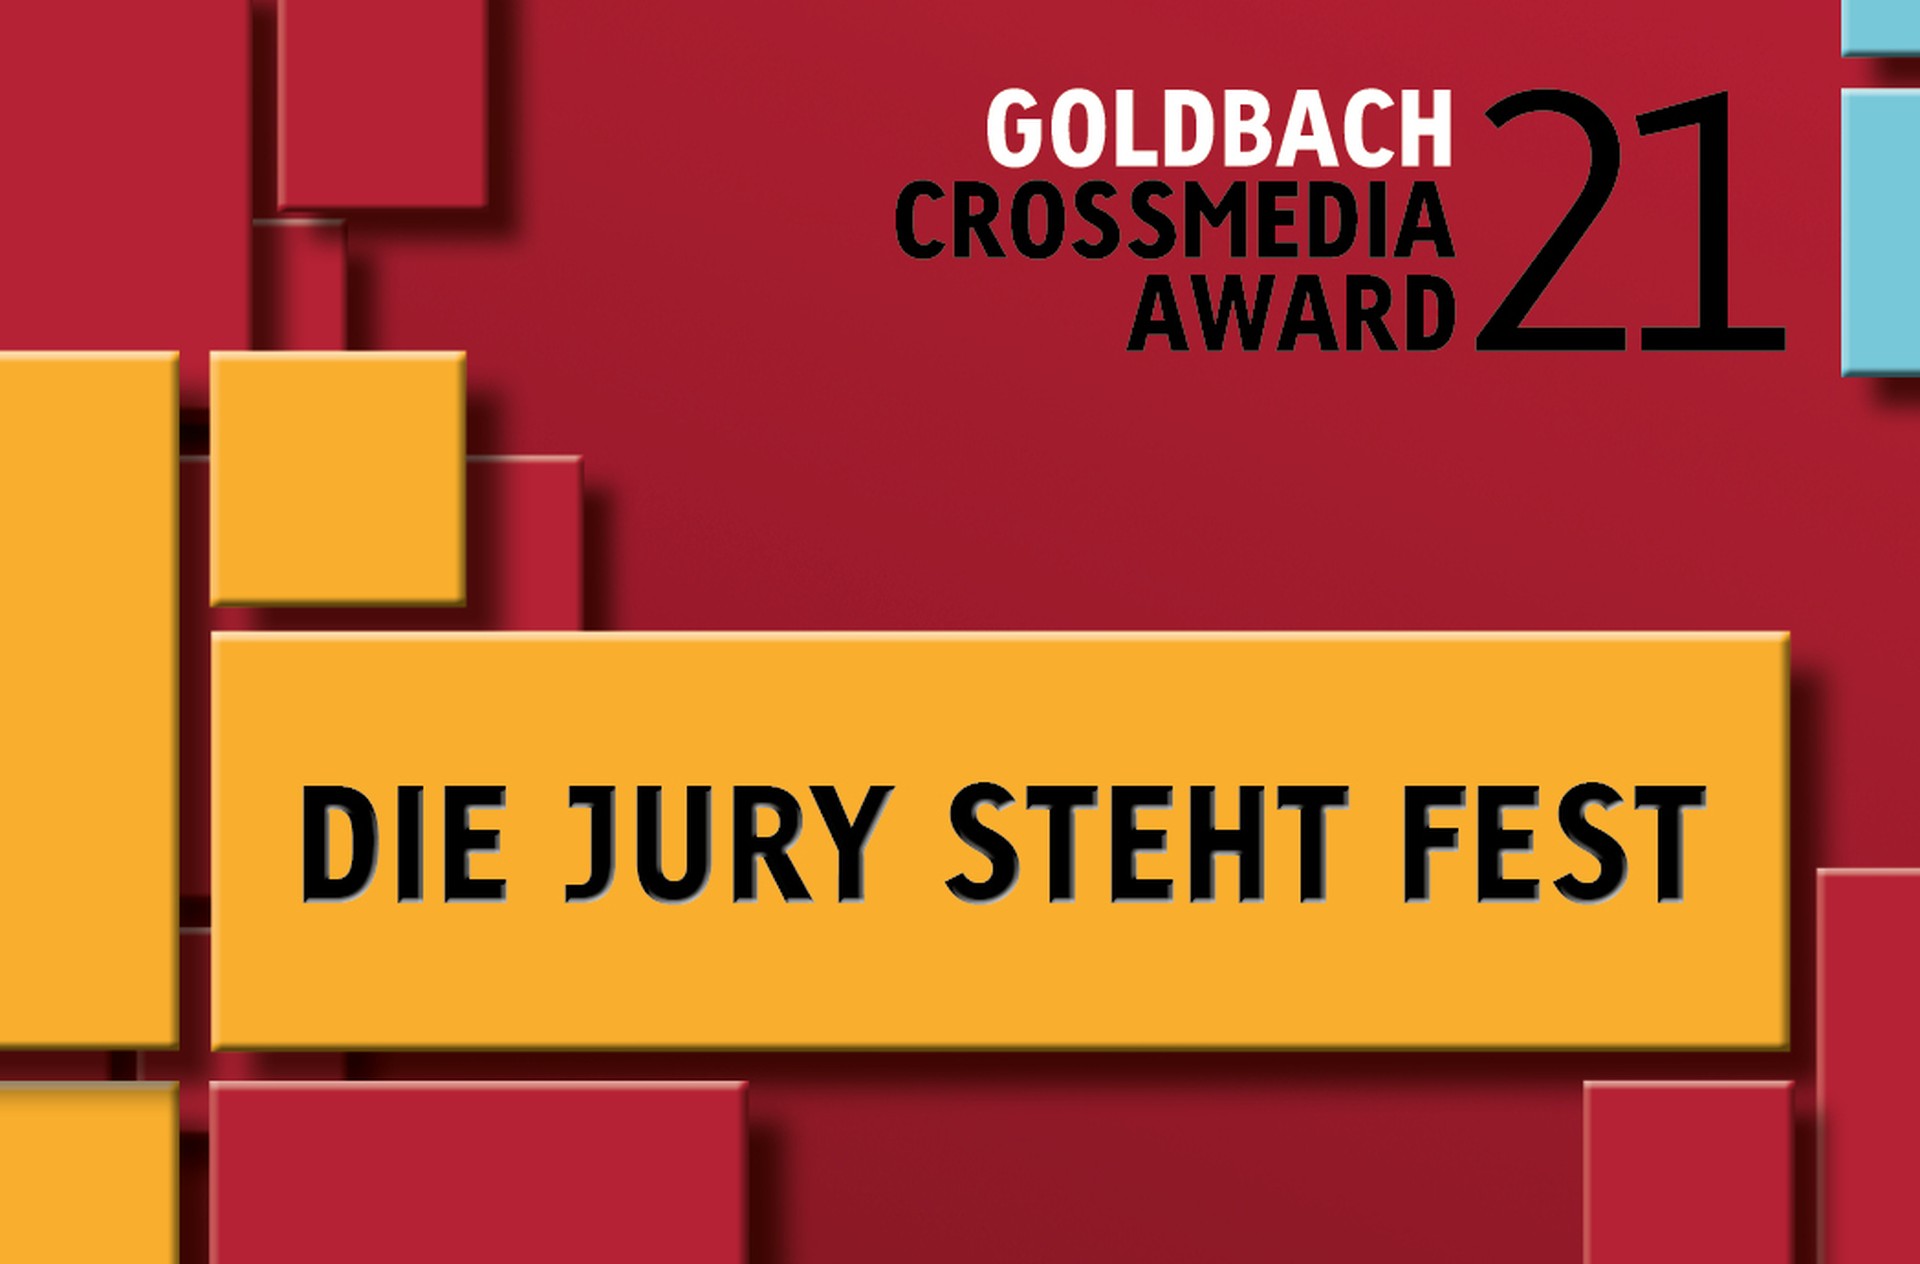 Visual cma2021 "Die Jury steht fest"